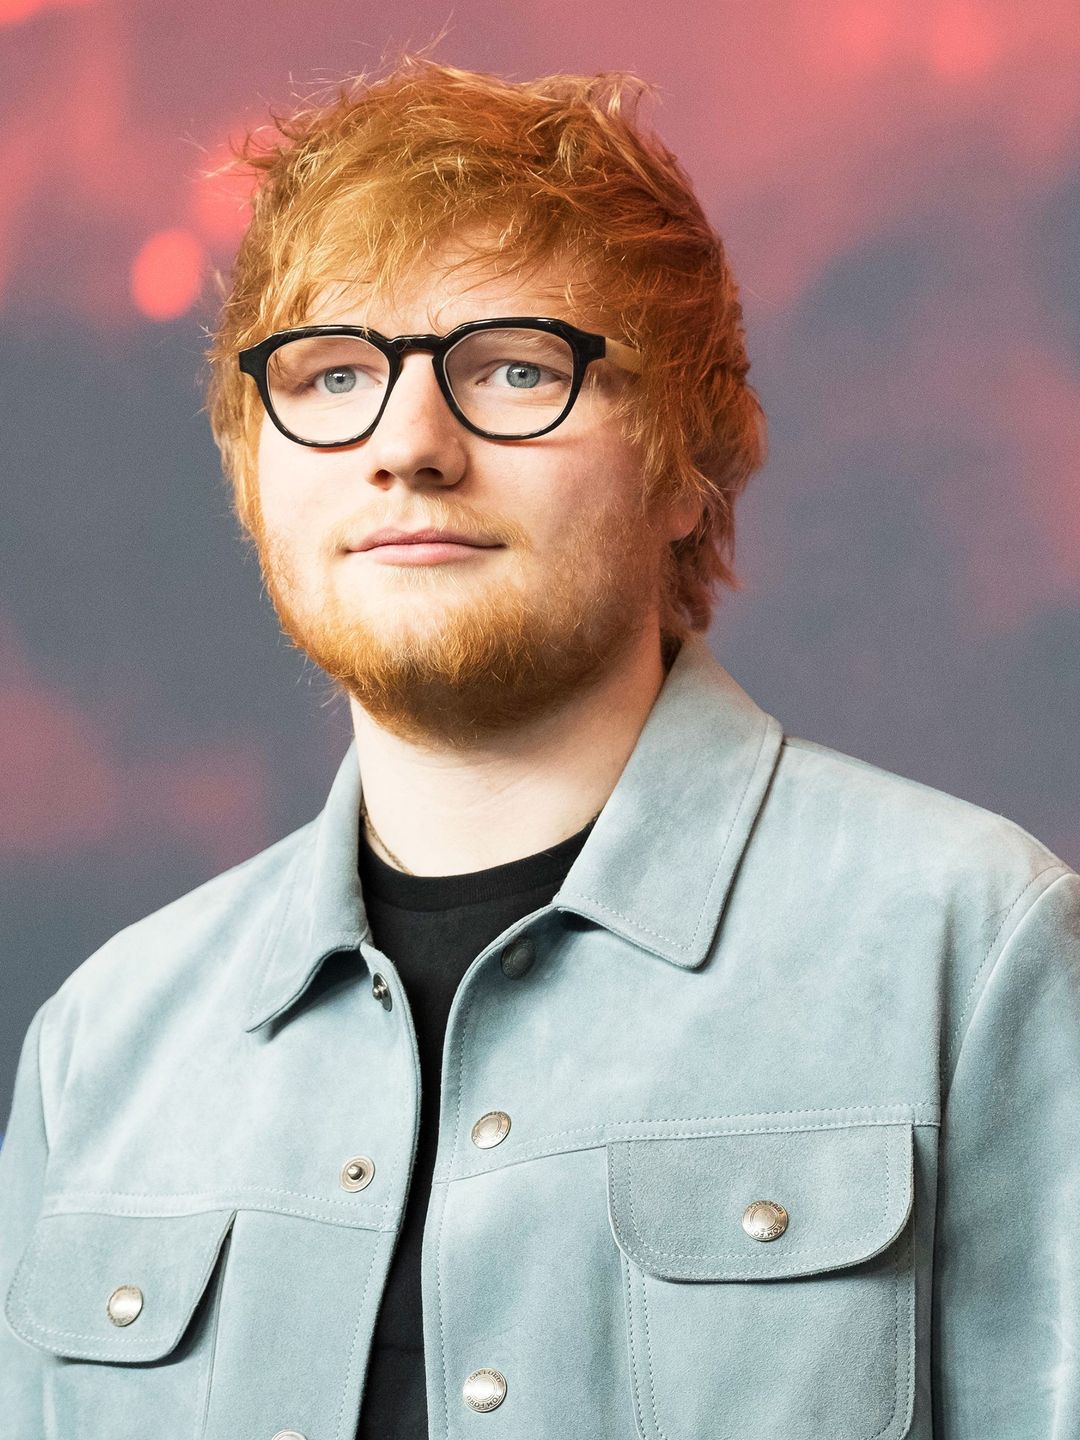 Ed Sheeran relationship